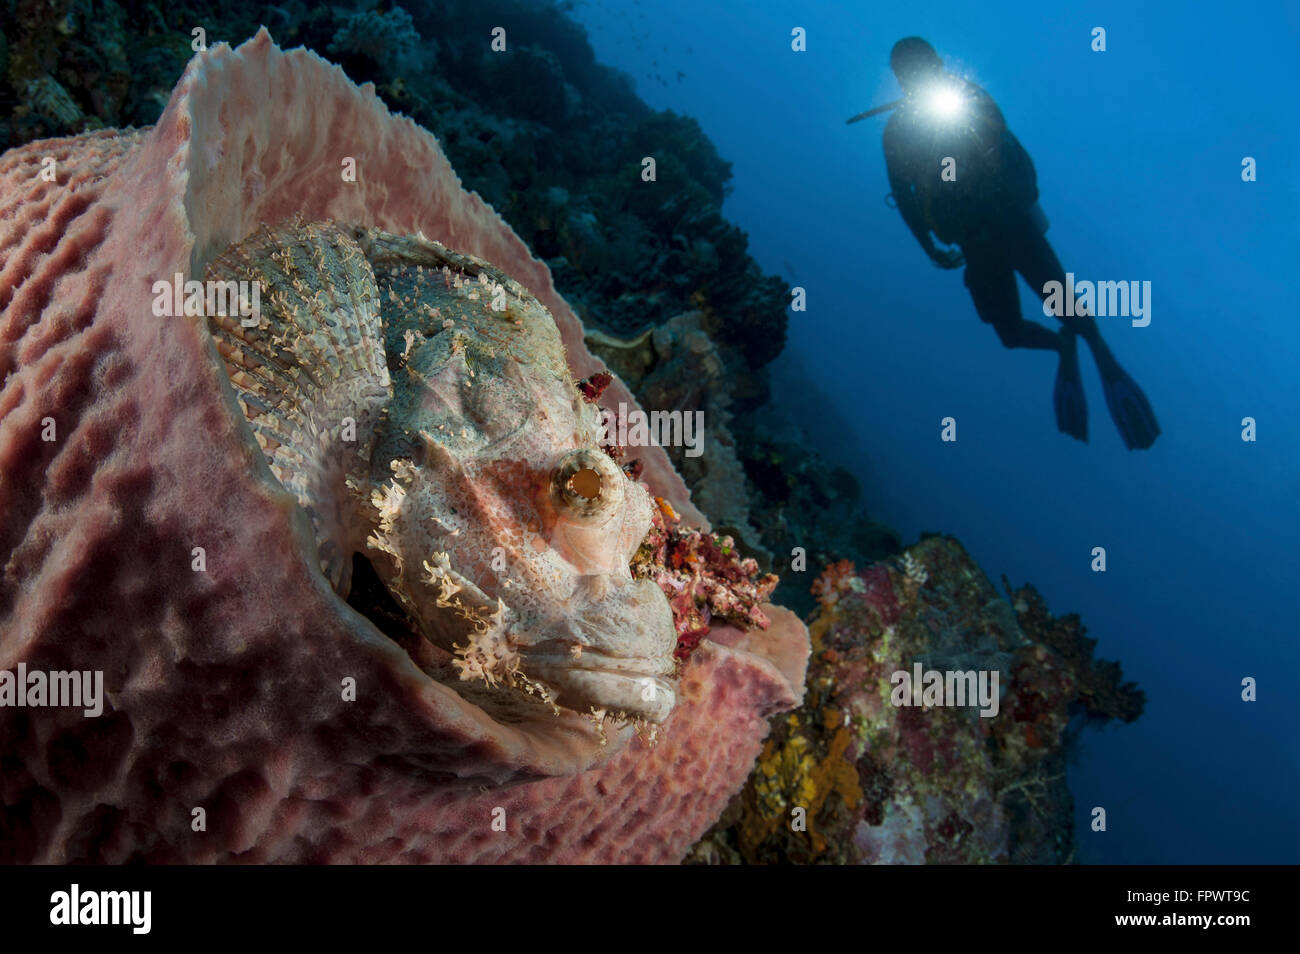 A diver looks on at a tassled scorpionfish (Scorpaenopis oxycephala) lying in a barrel sponge, Komodo National Park, Indonesia. Stock Photo